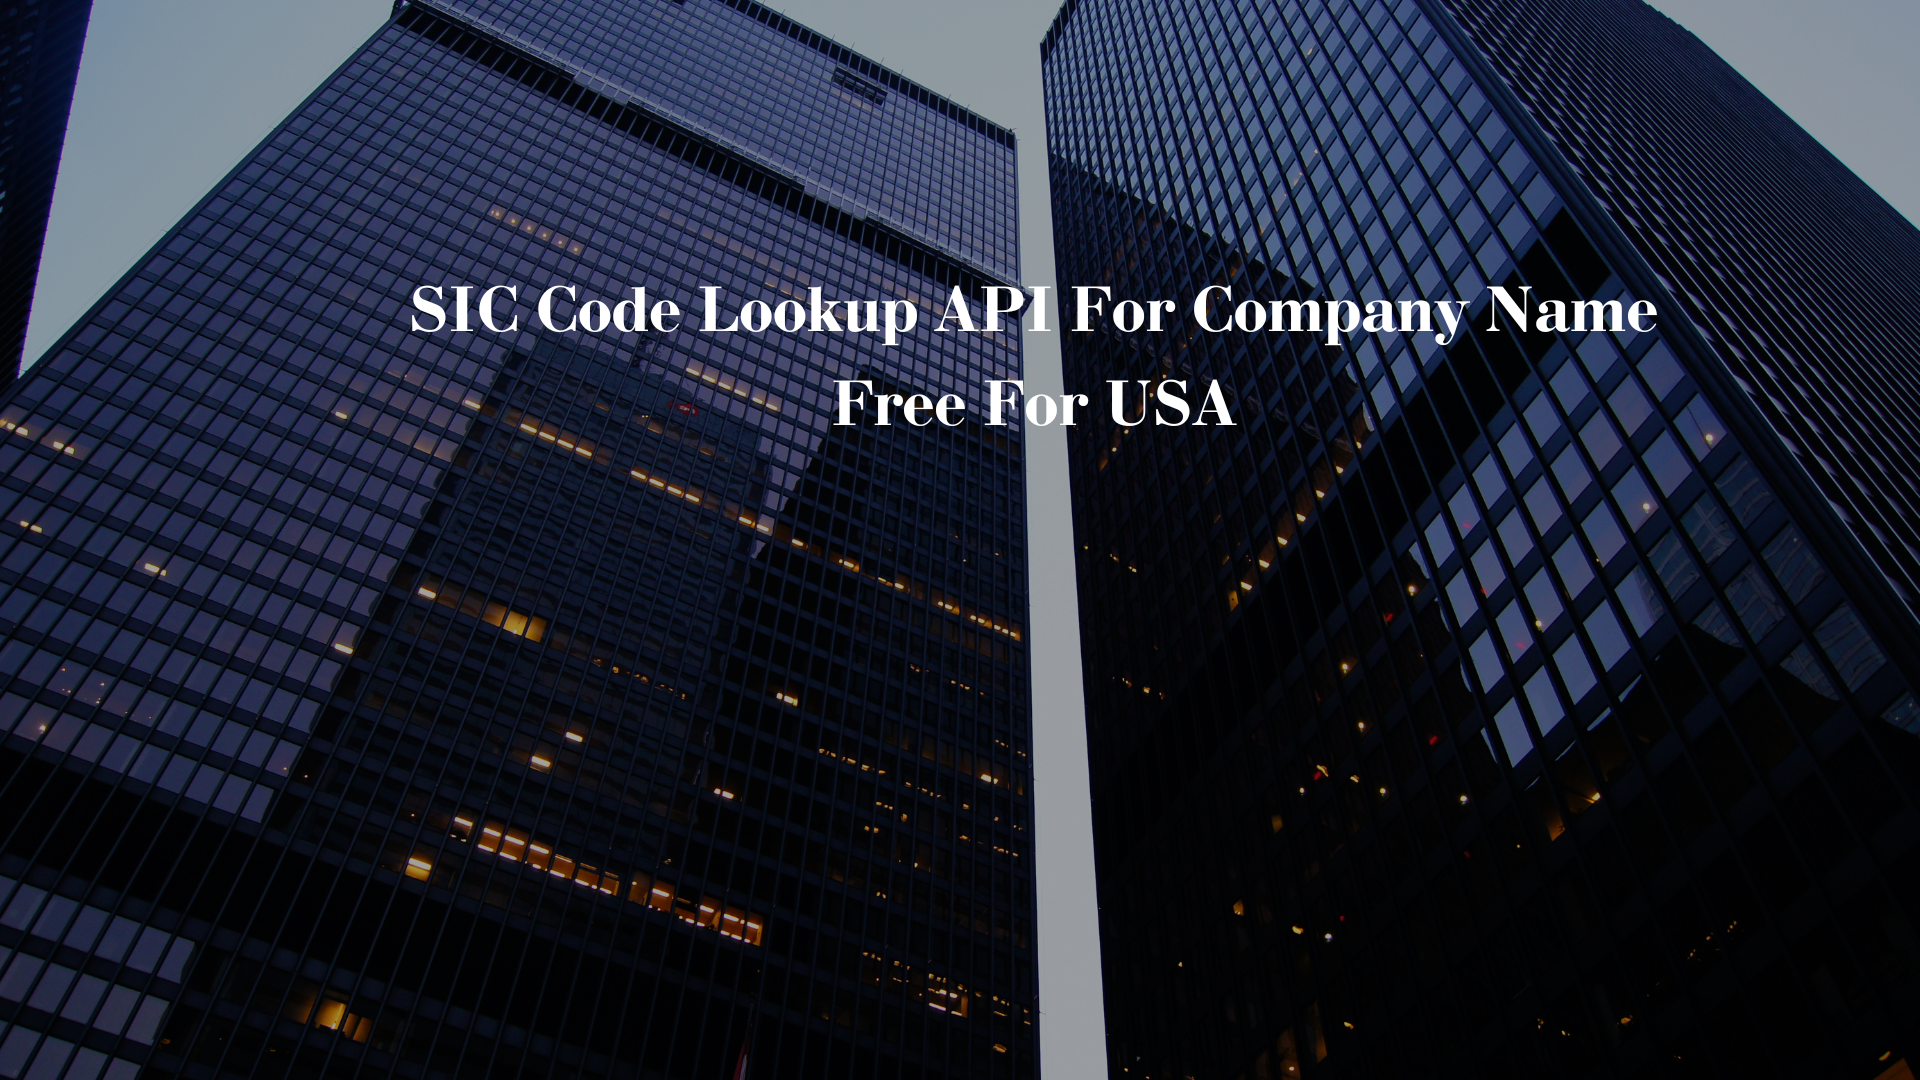 SIC Code Lookup API For Company Name Free For USA